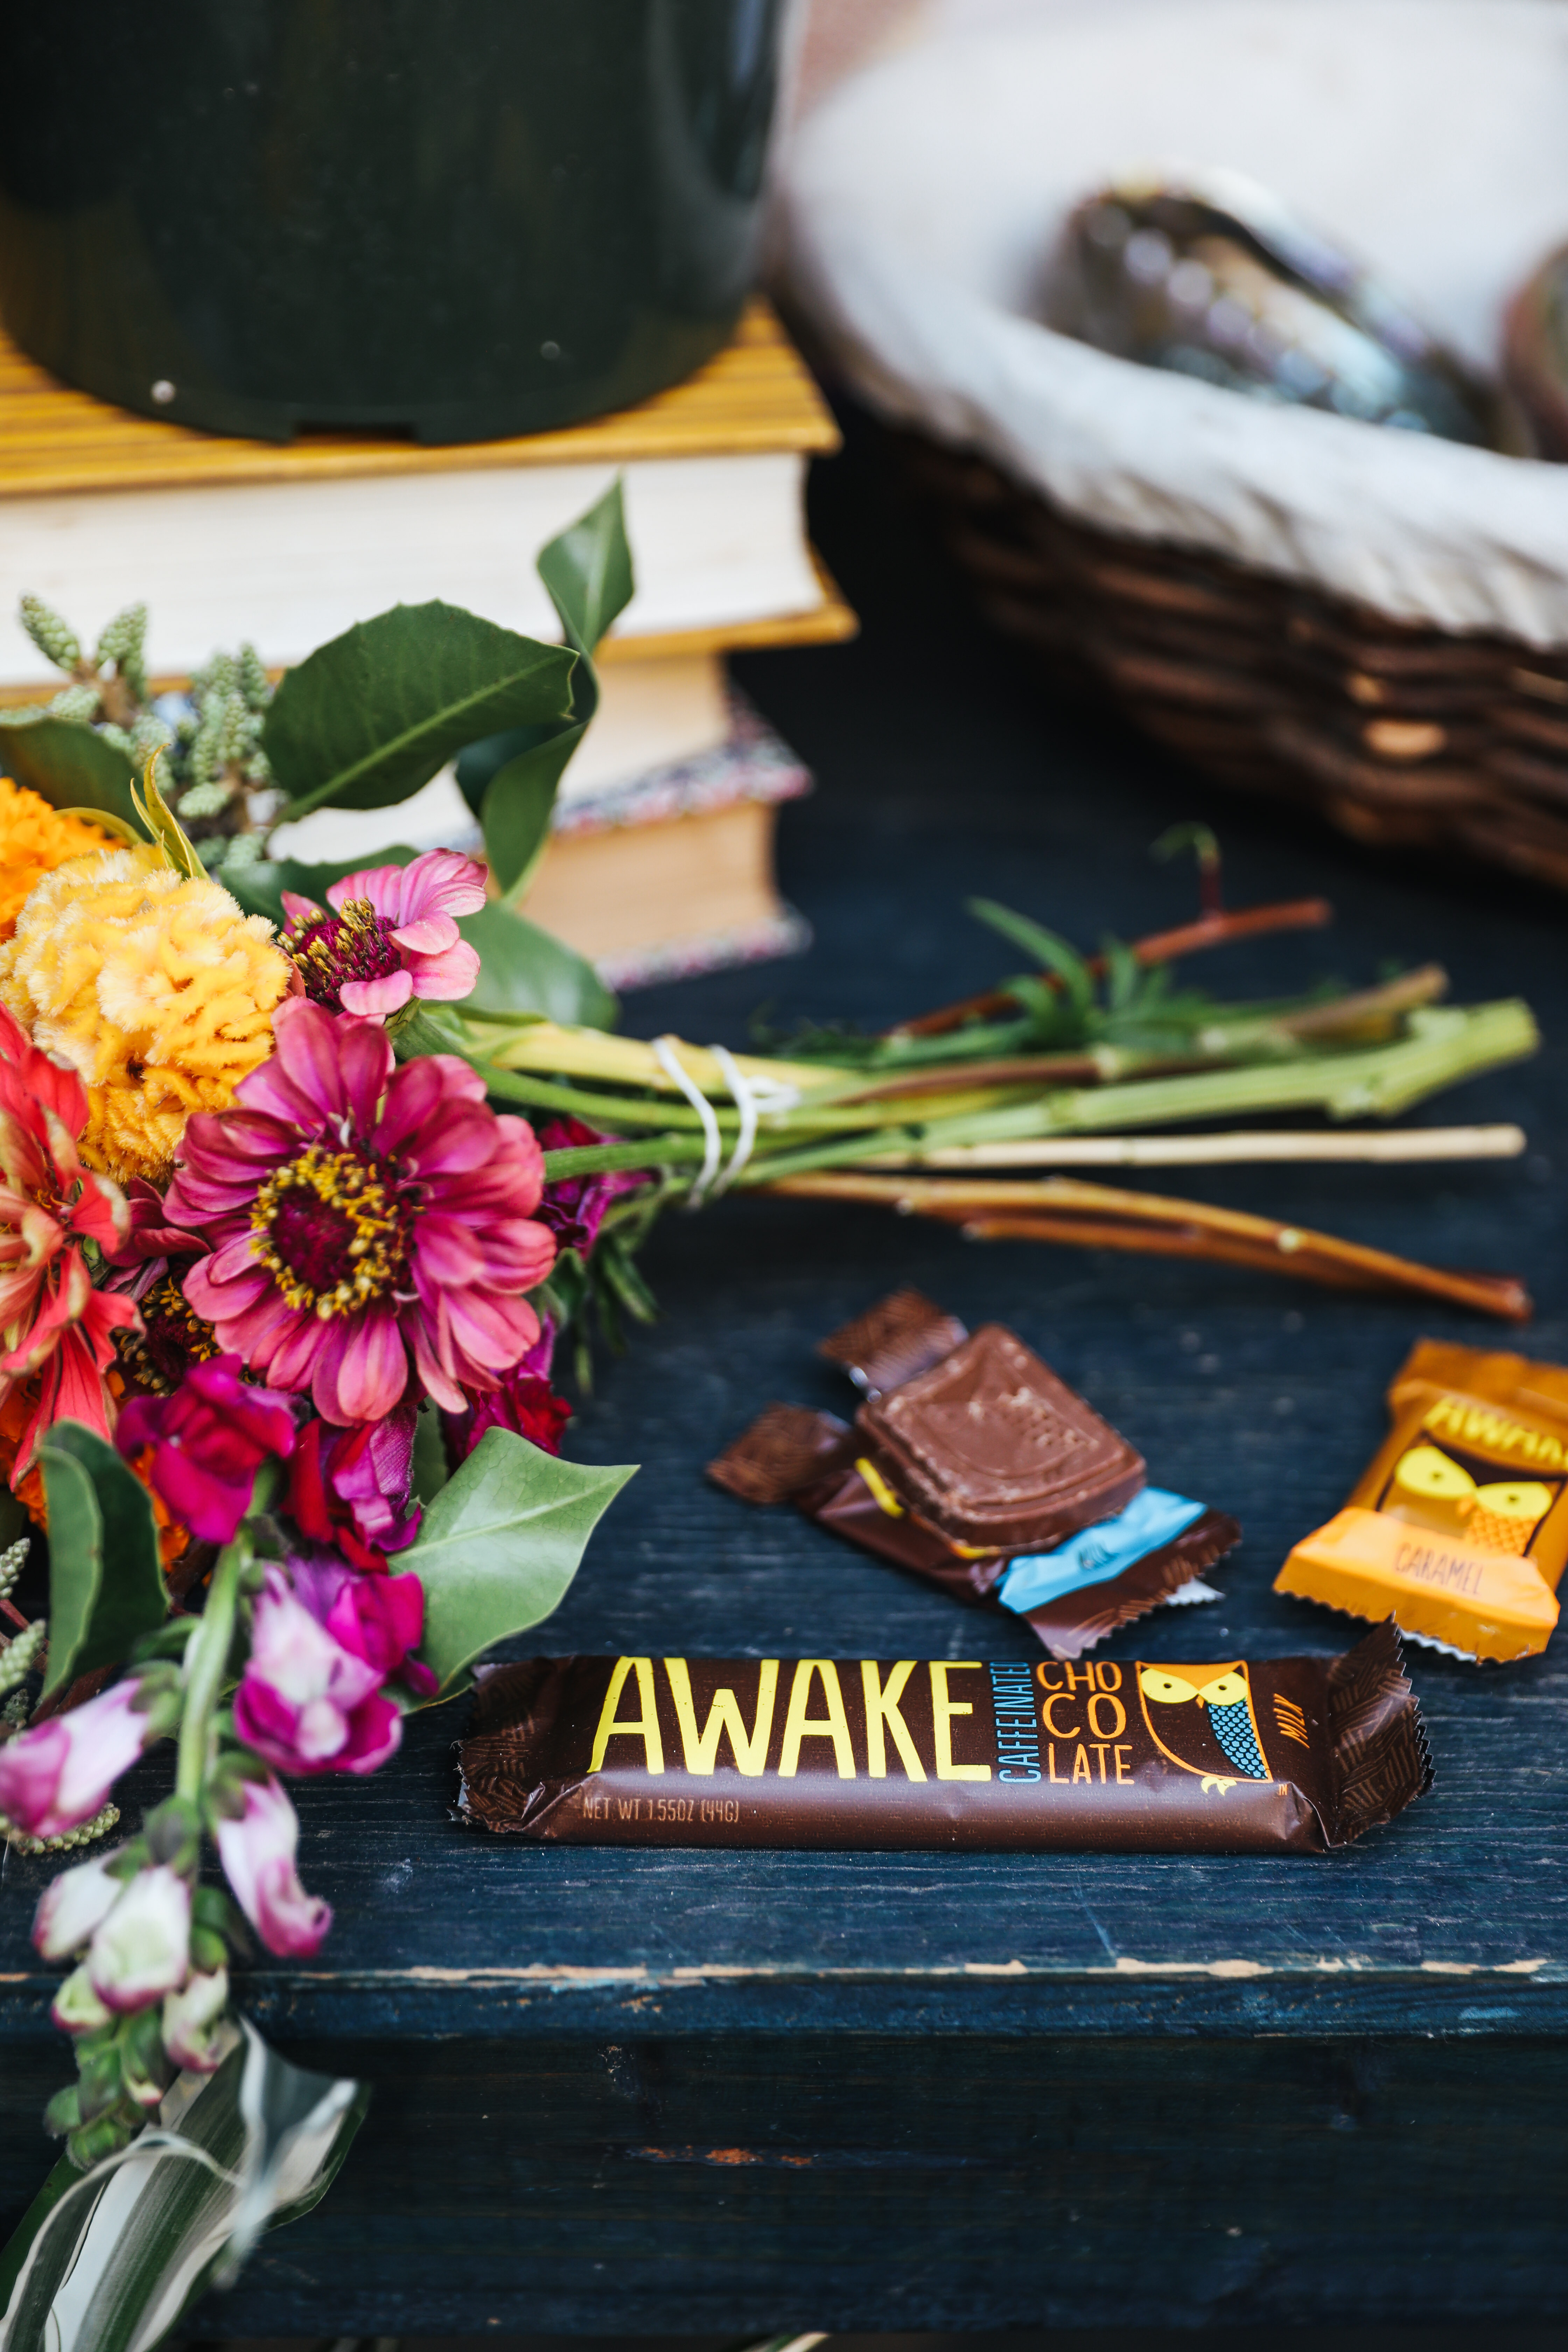 5 Ways to Make Your Monday Better with AWAKE Chocolate.